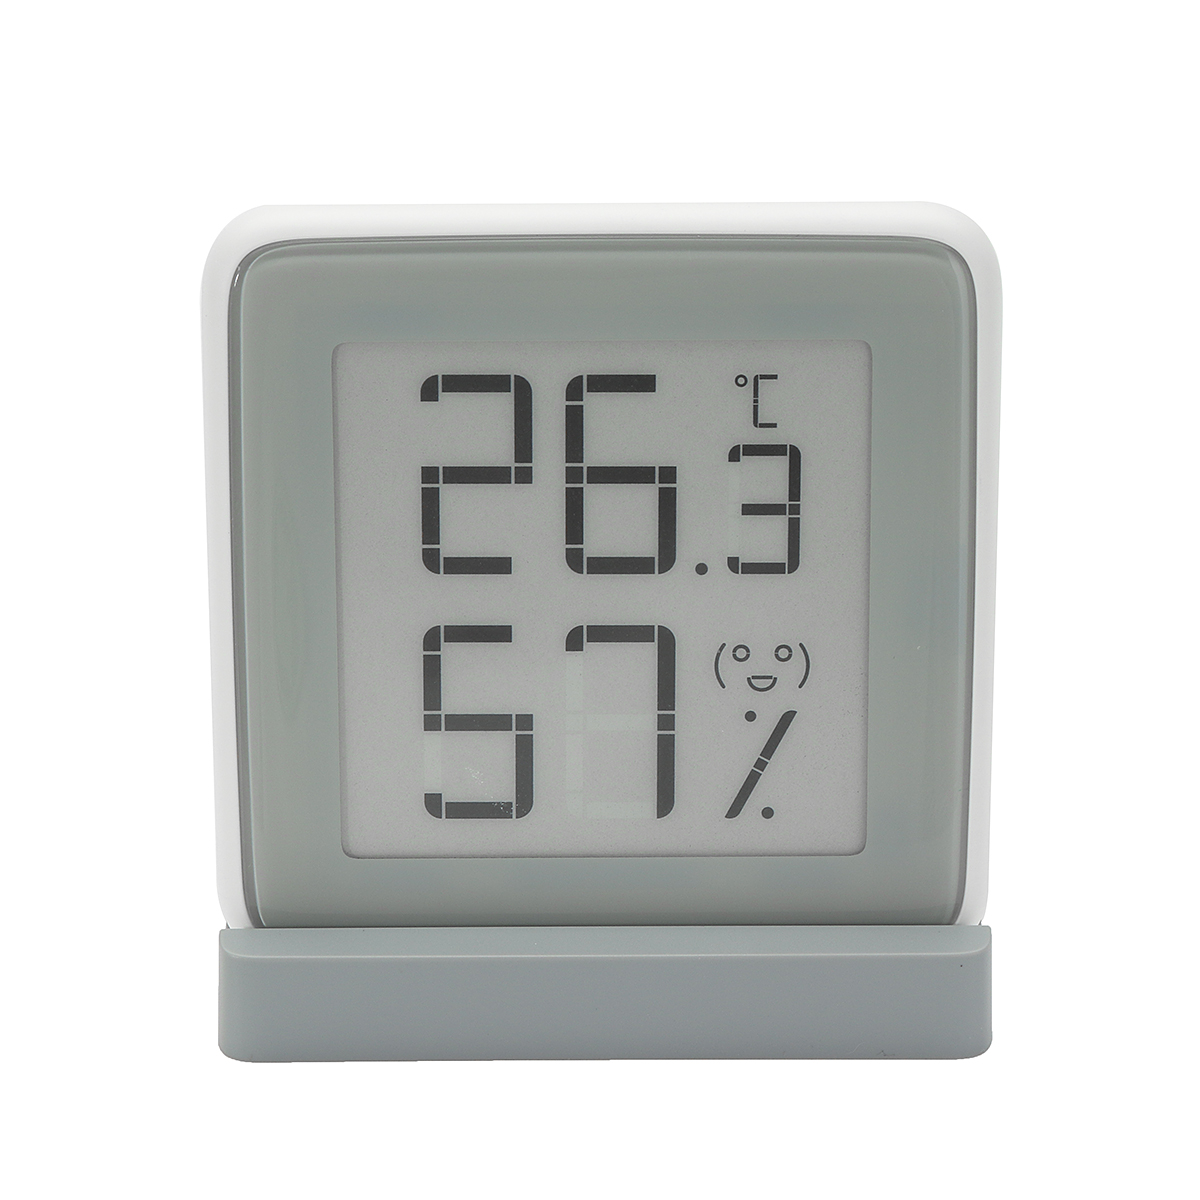 Mini-Digital-Thermometer-Humidity-Meter-Room-Temperature-Indoor-Hygrometer-LCD-1319357-7